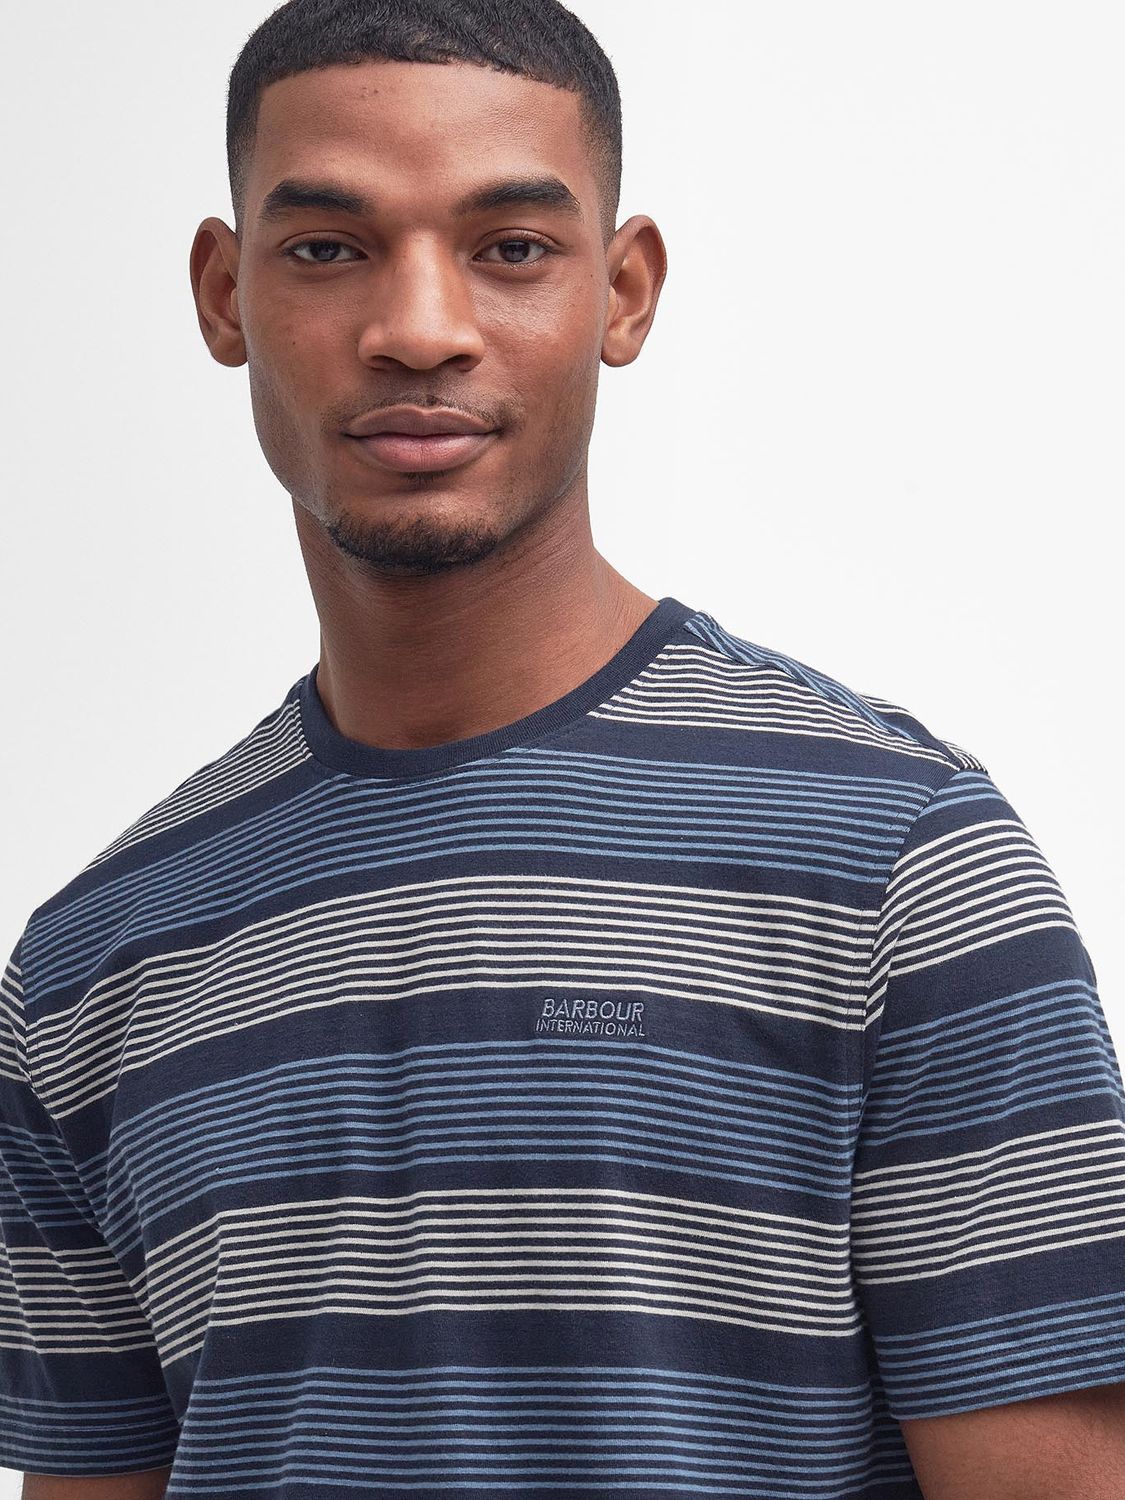 Barbour International Putney Striped T-Shirt, Navy, S